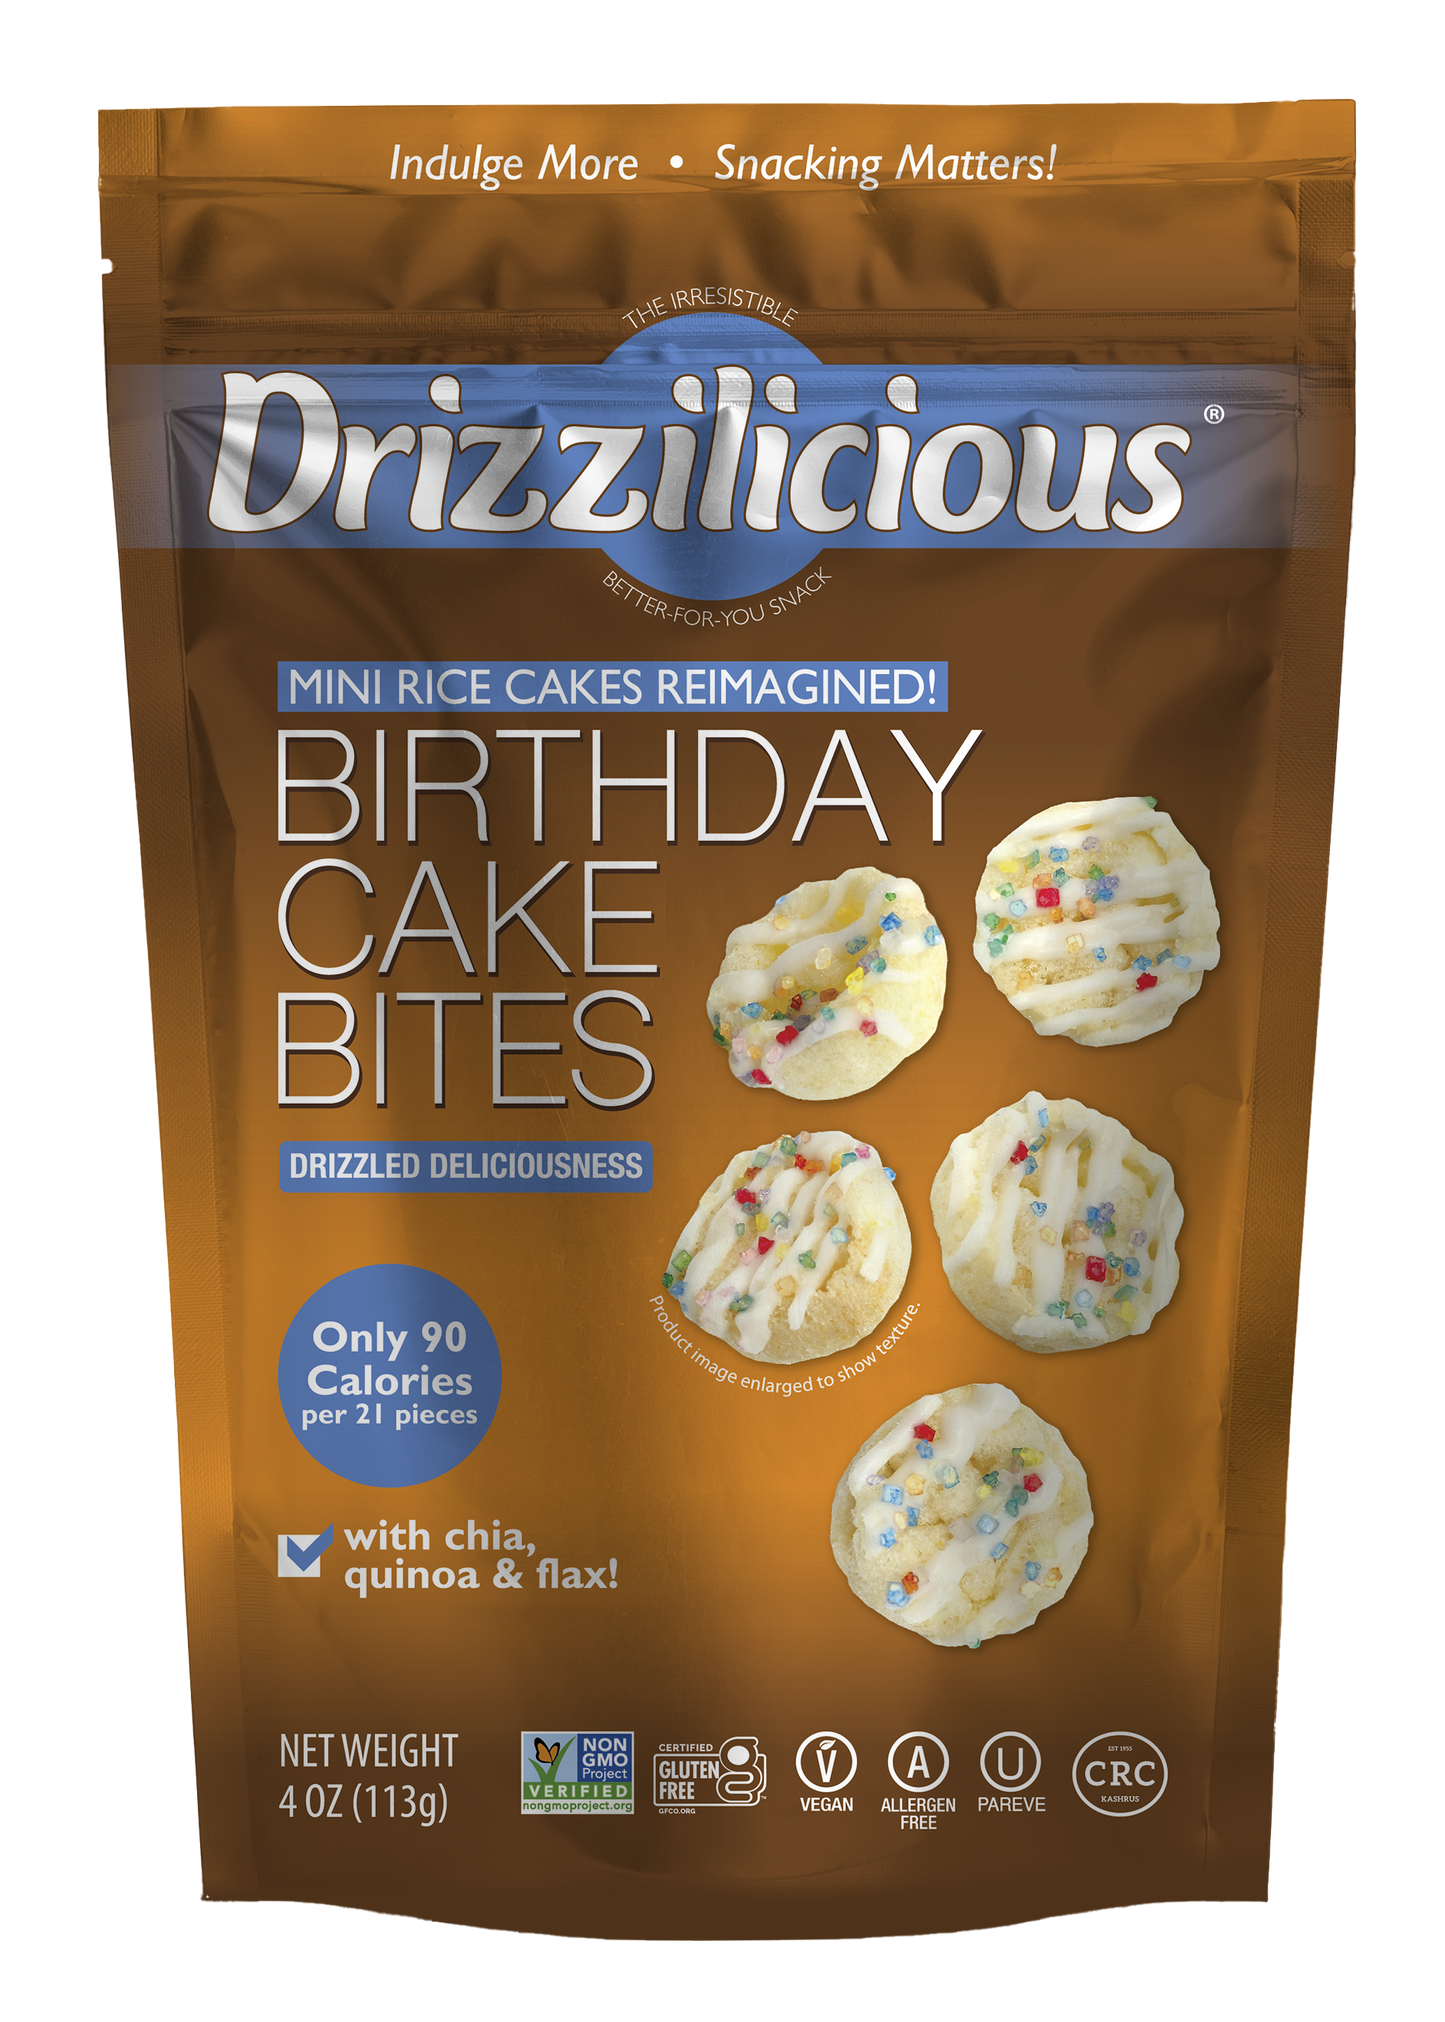 Birthday Cake 4oz - Drizzilicious